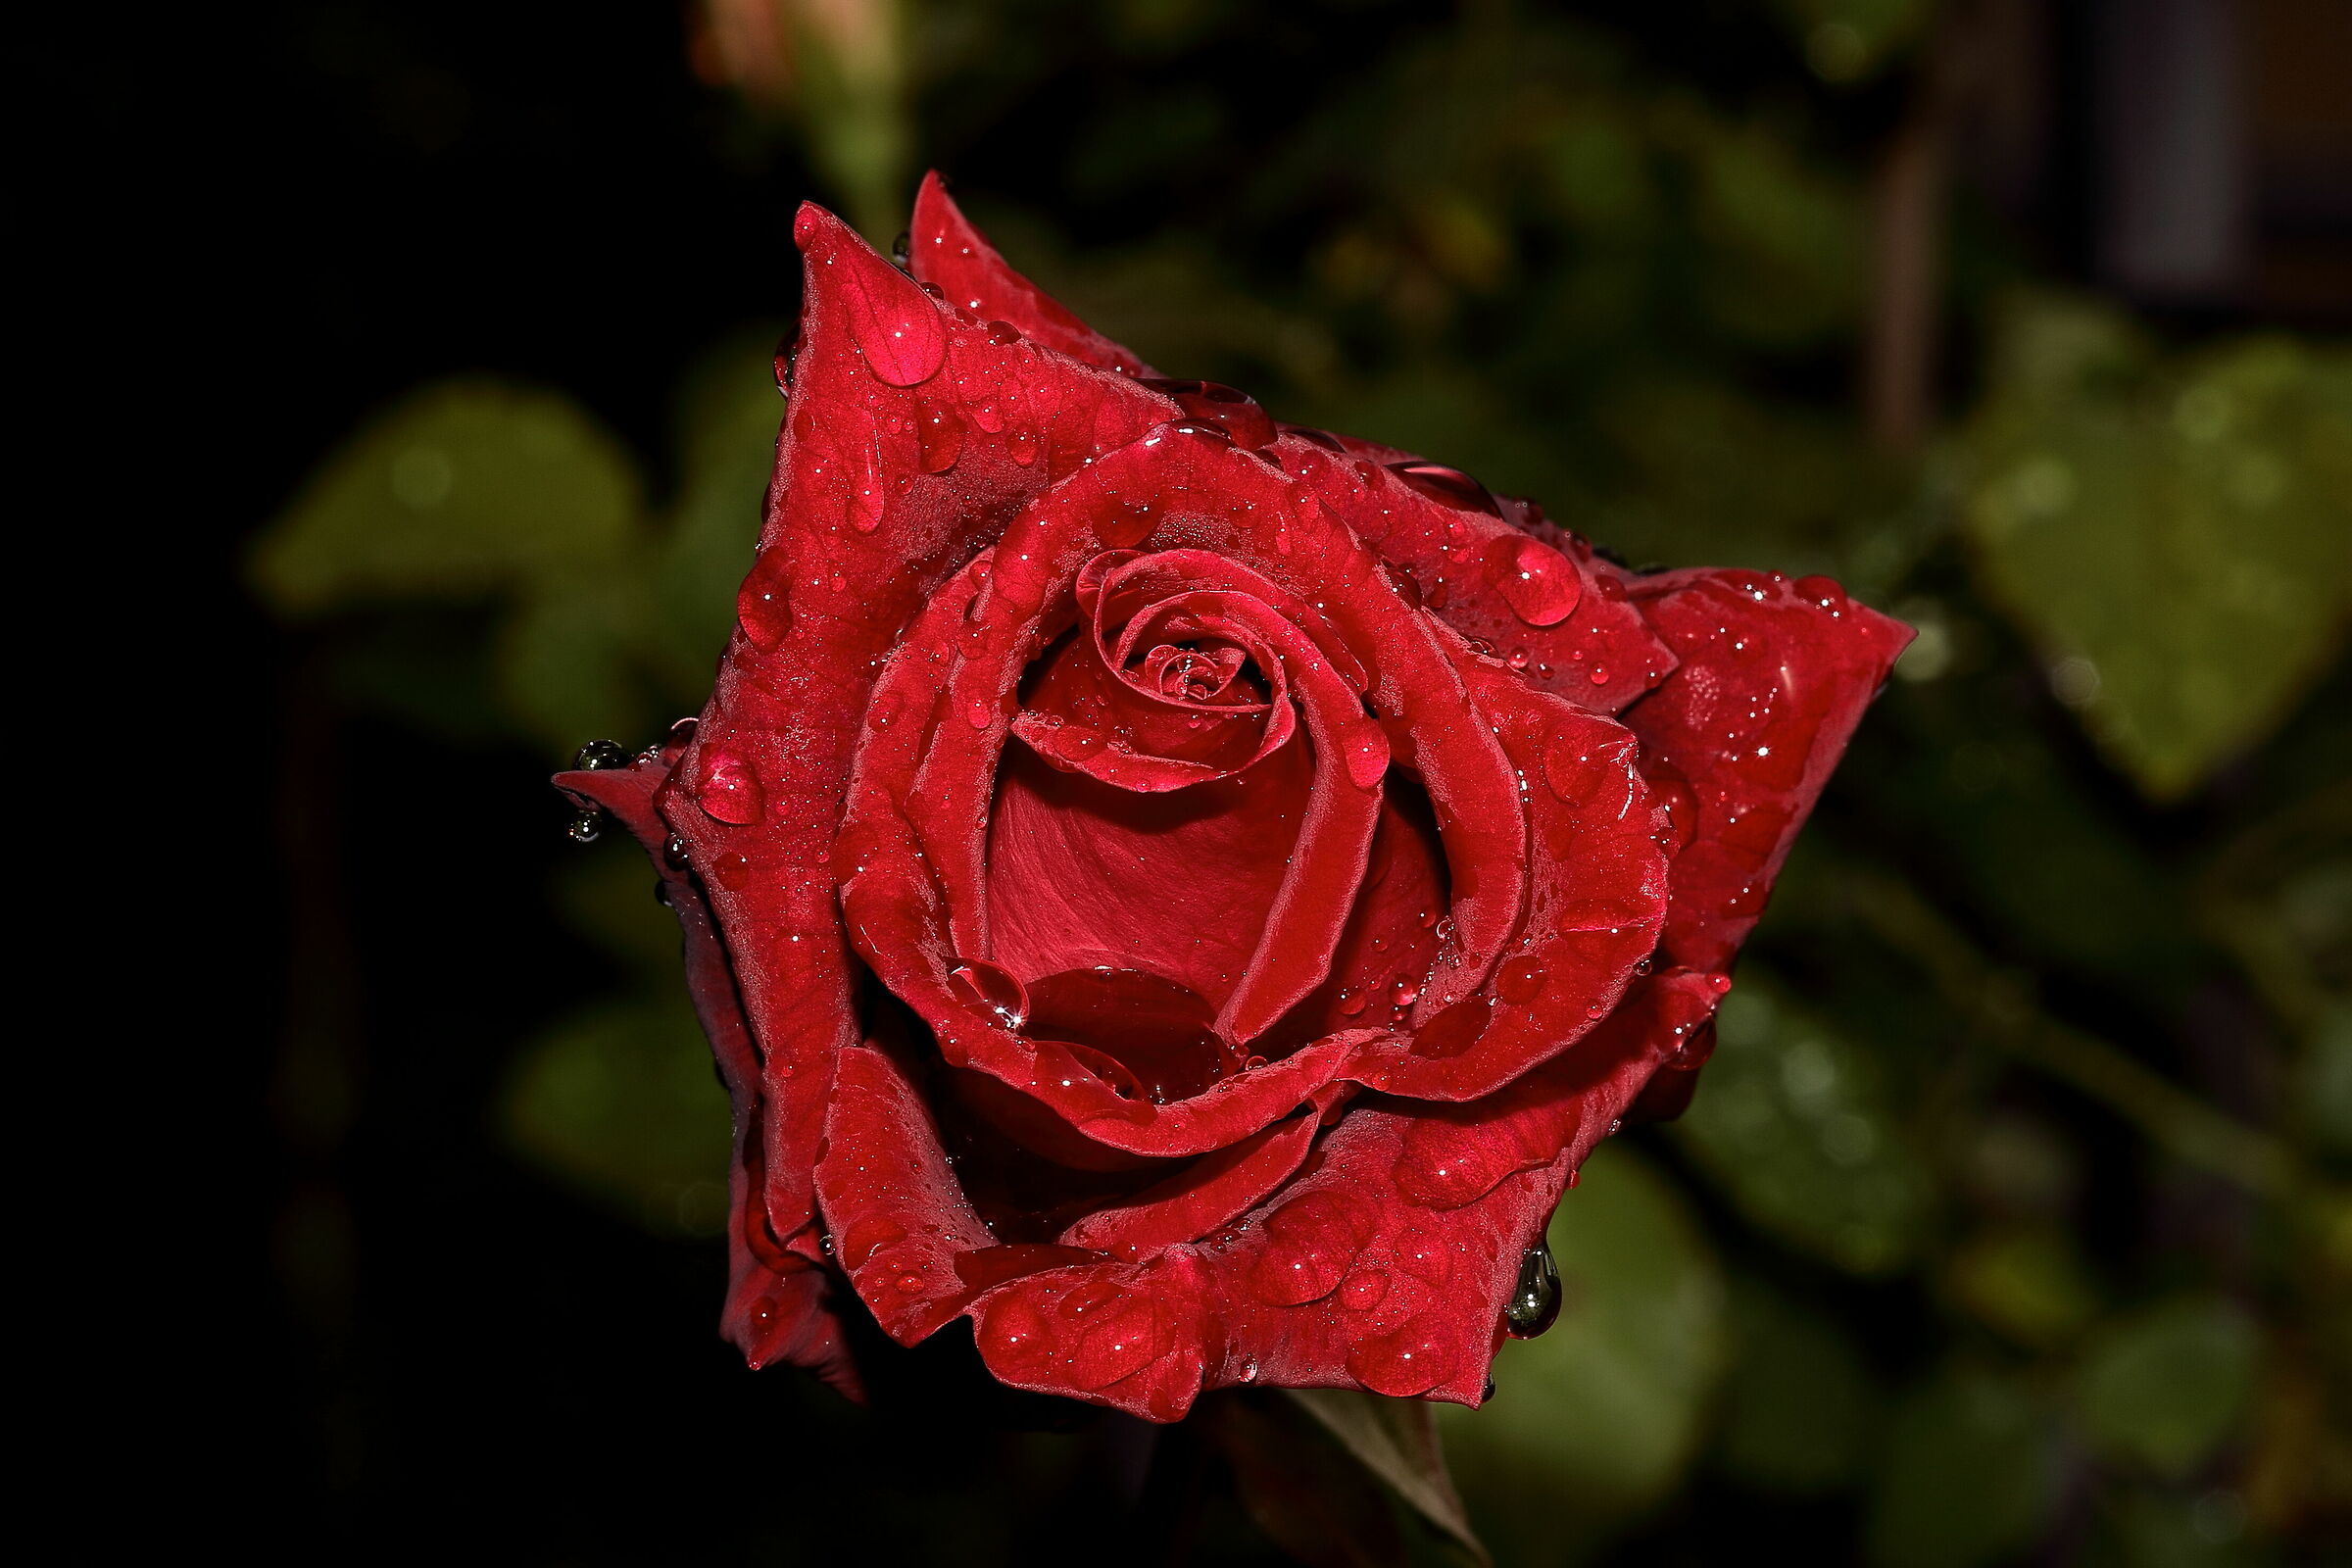 A bright rose...